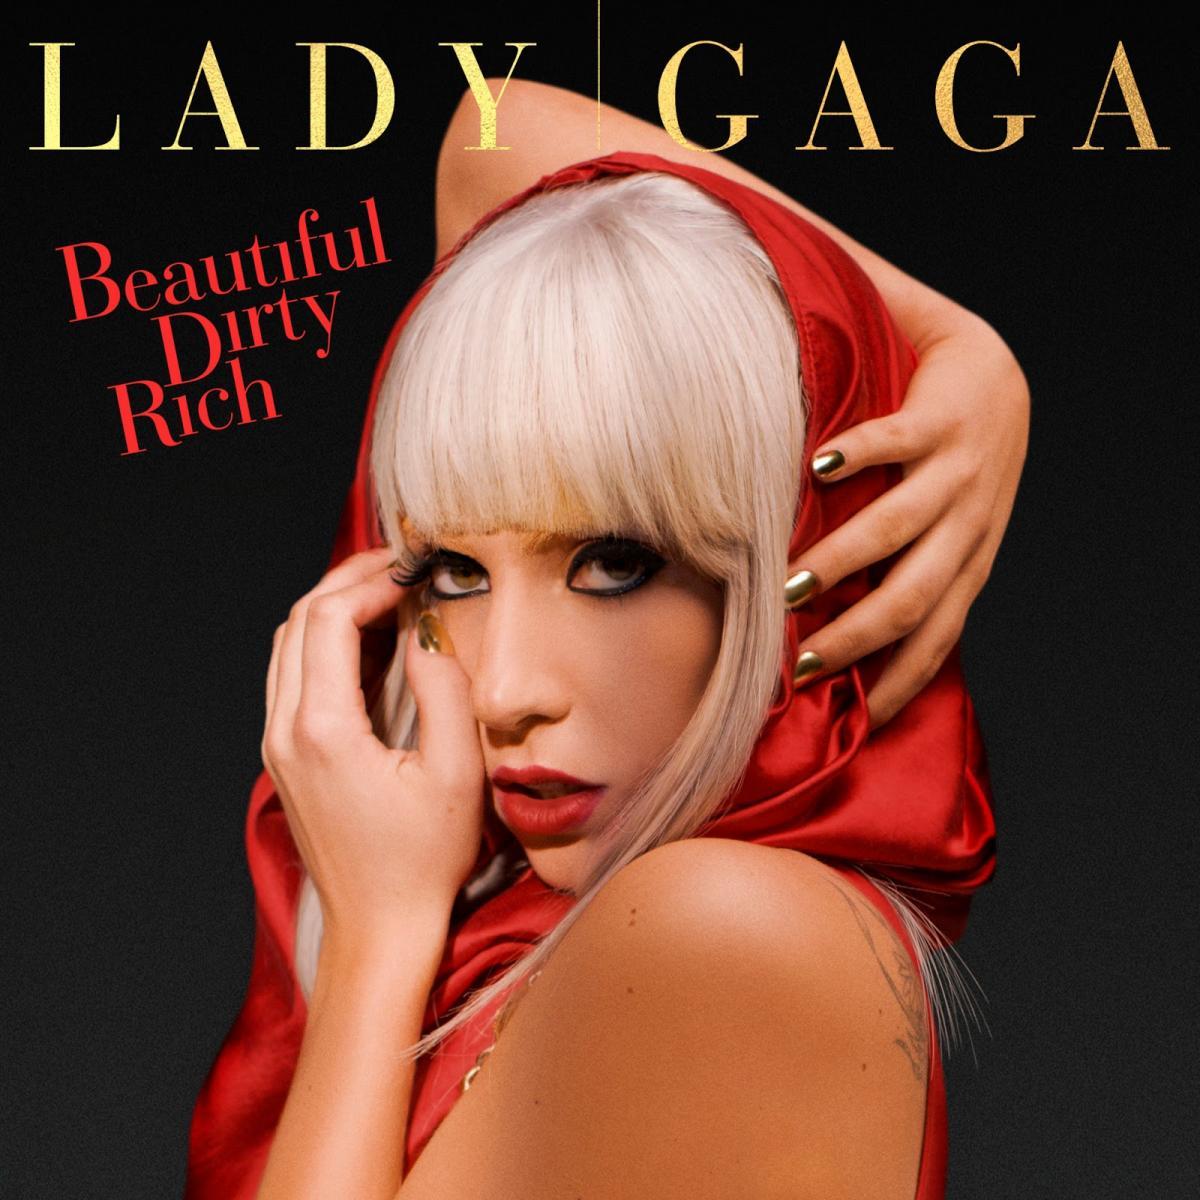 Lady gaga dj tons. Леди Гага beautiful, Dirty, Rich. Lady Gaga beautiful. Lady Gaga красивая. Lady Gaga 2013.